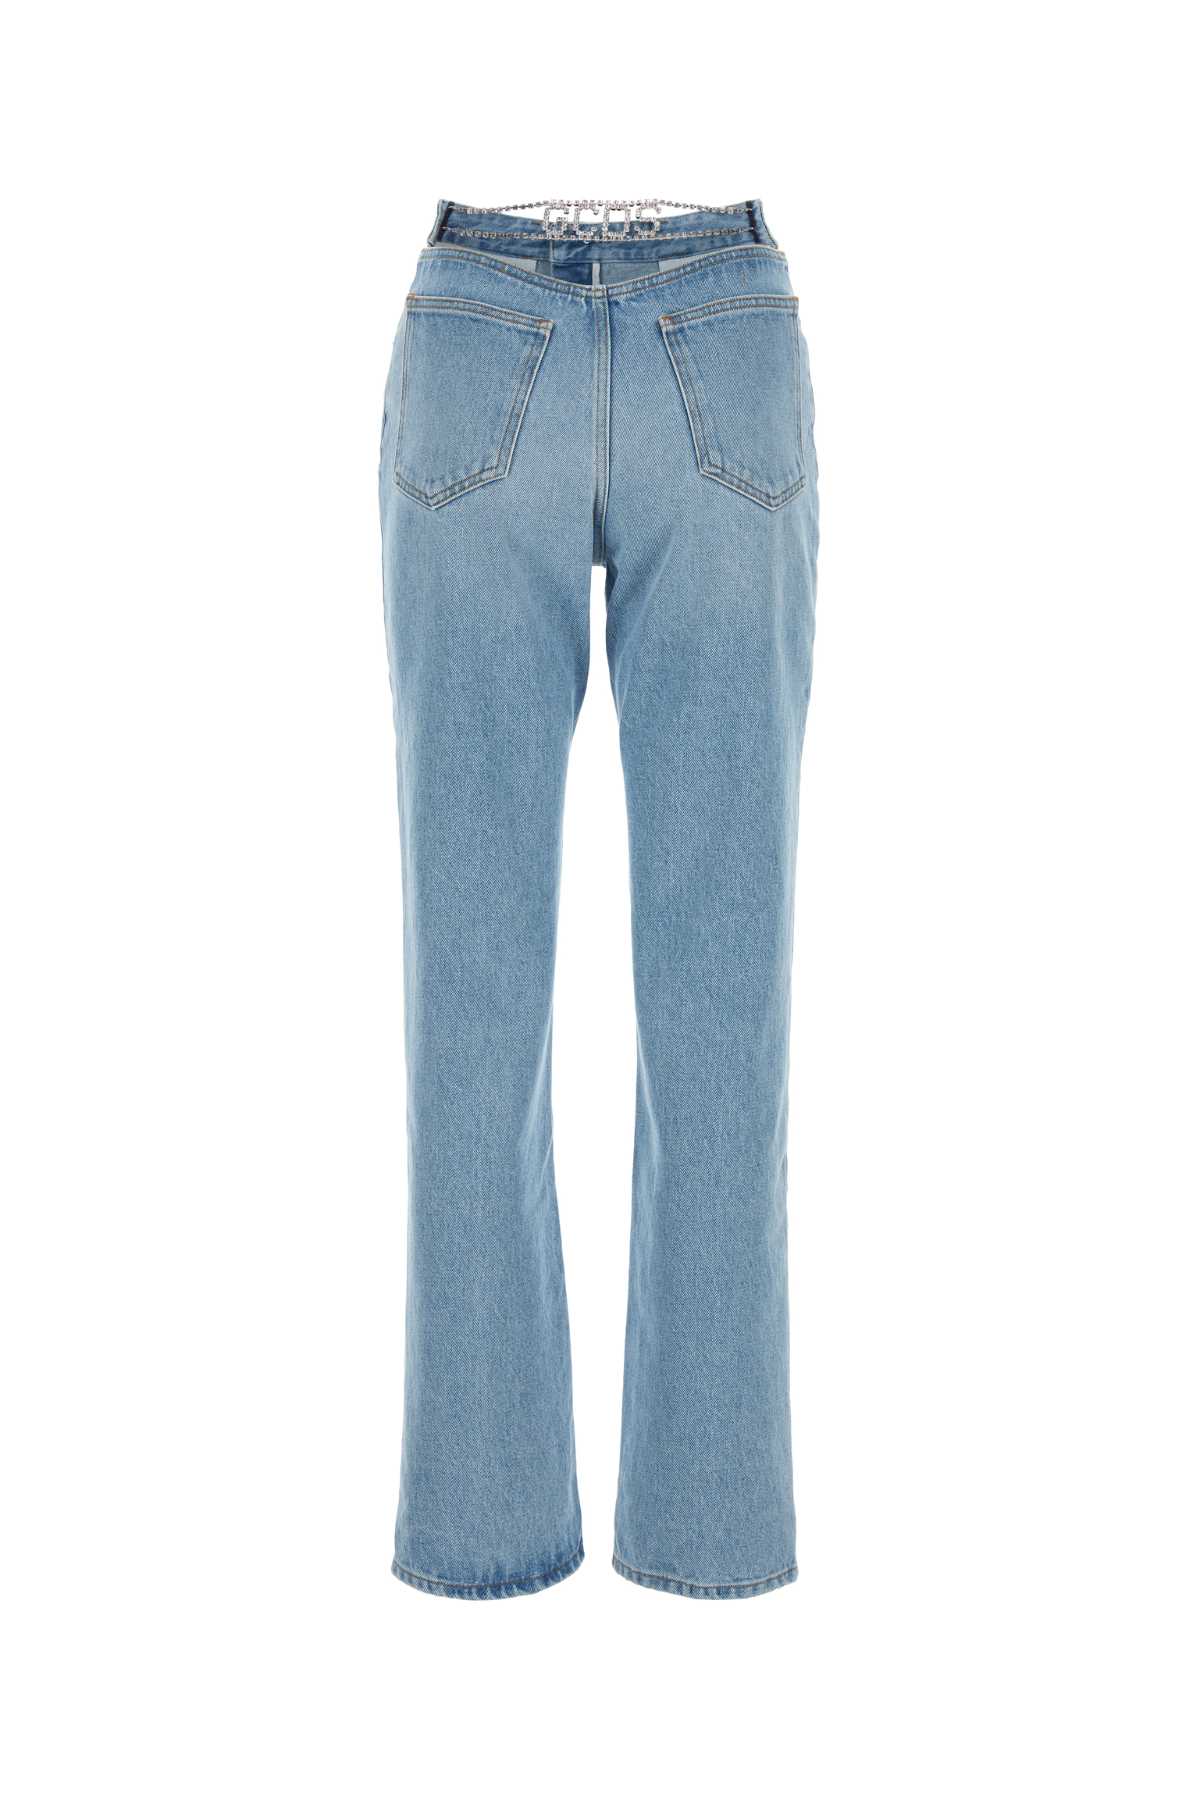 Gcds Denim Jeans In Lightblue